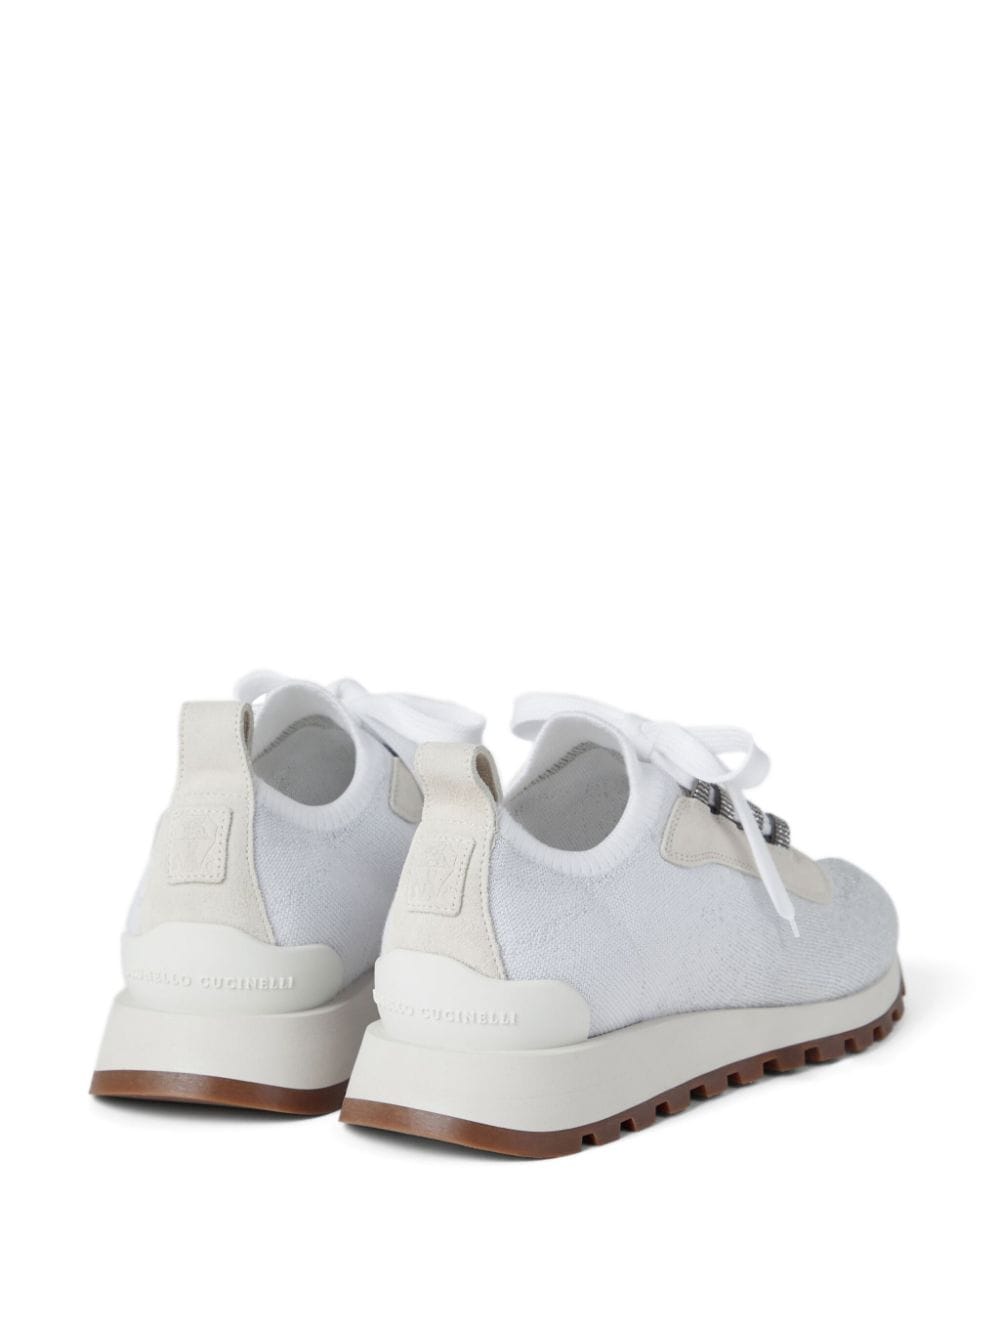 BRUNELLO CUCINELLI Sparkling Cotton Knit Women's Sneakers - White